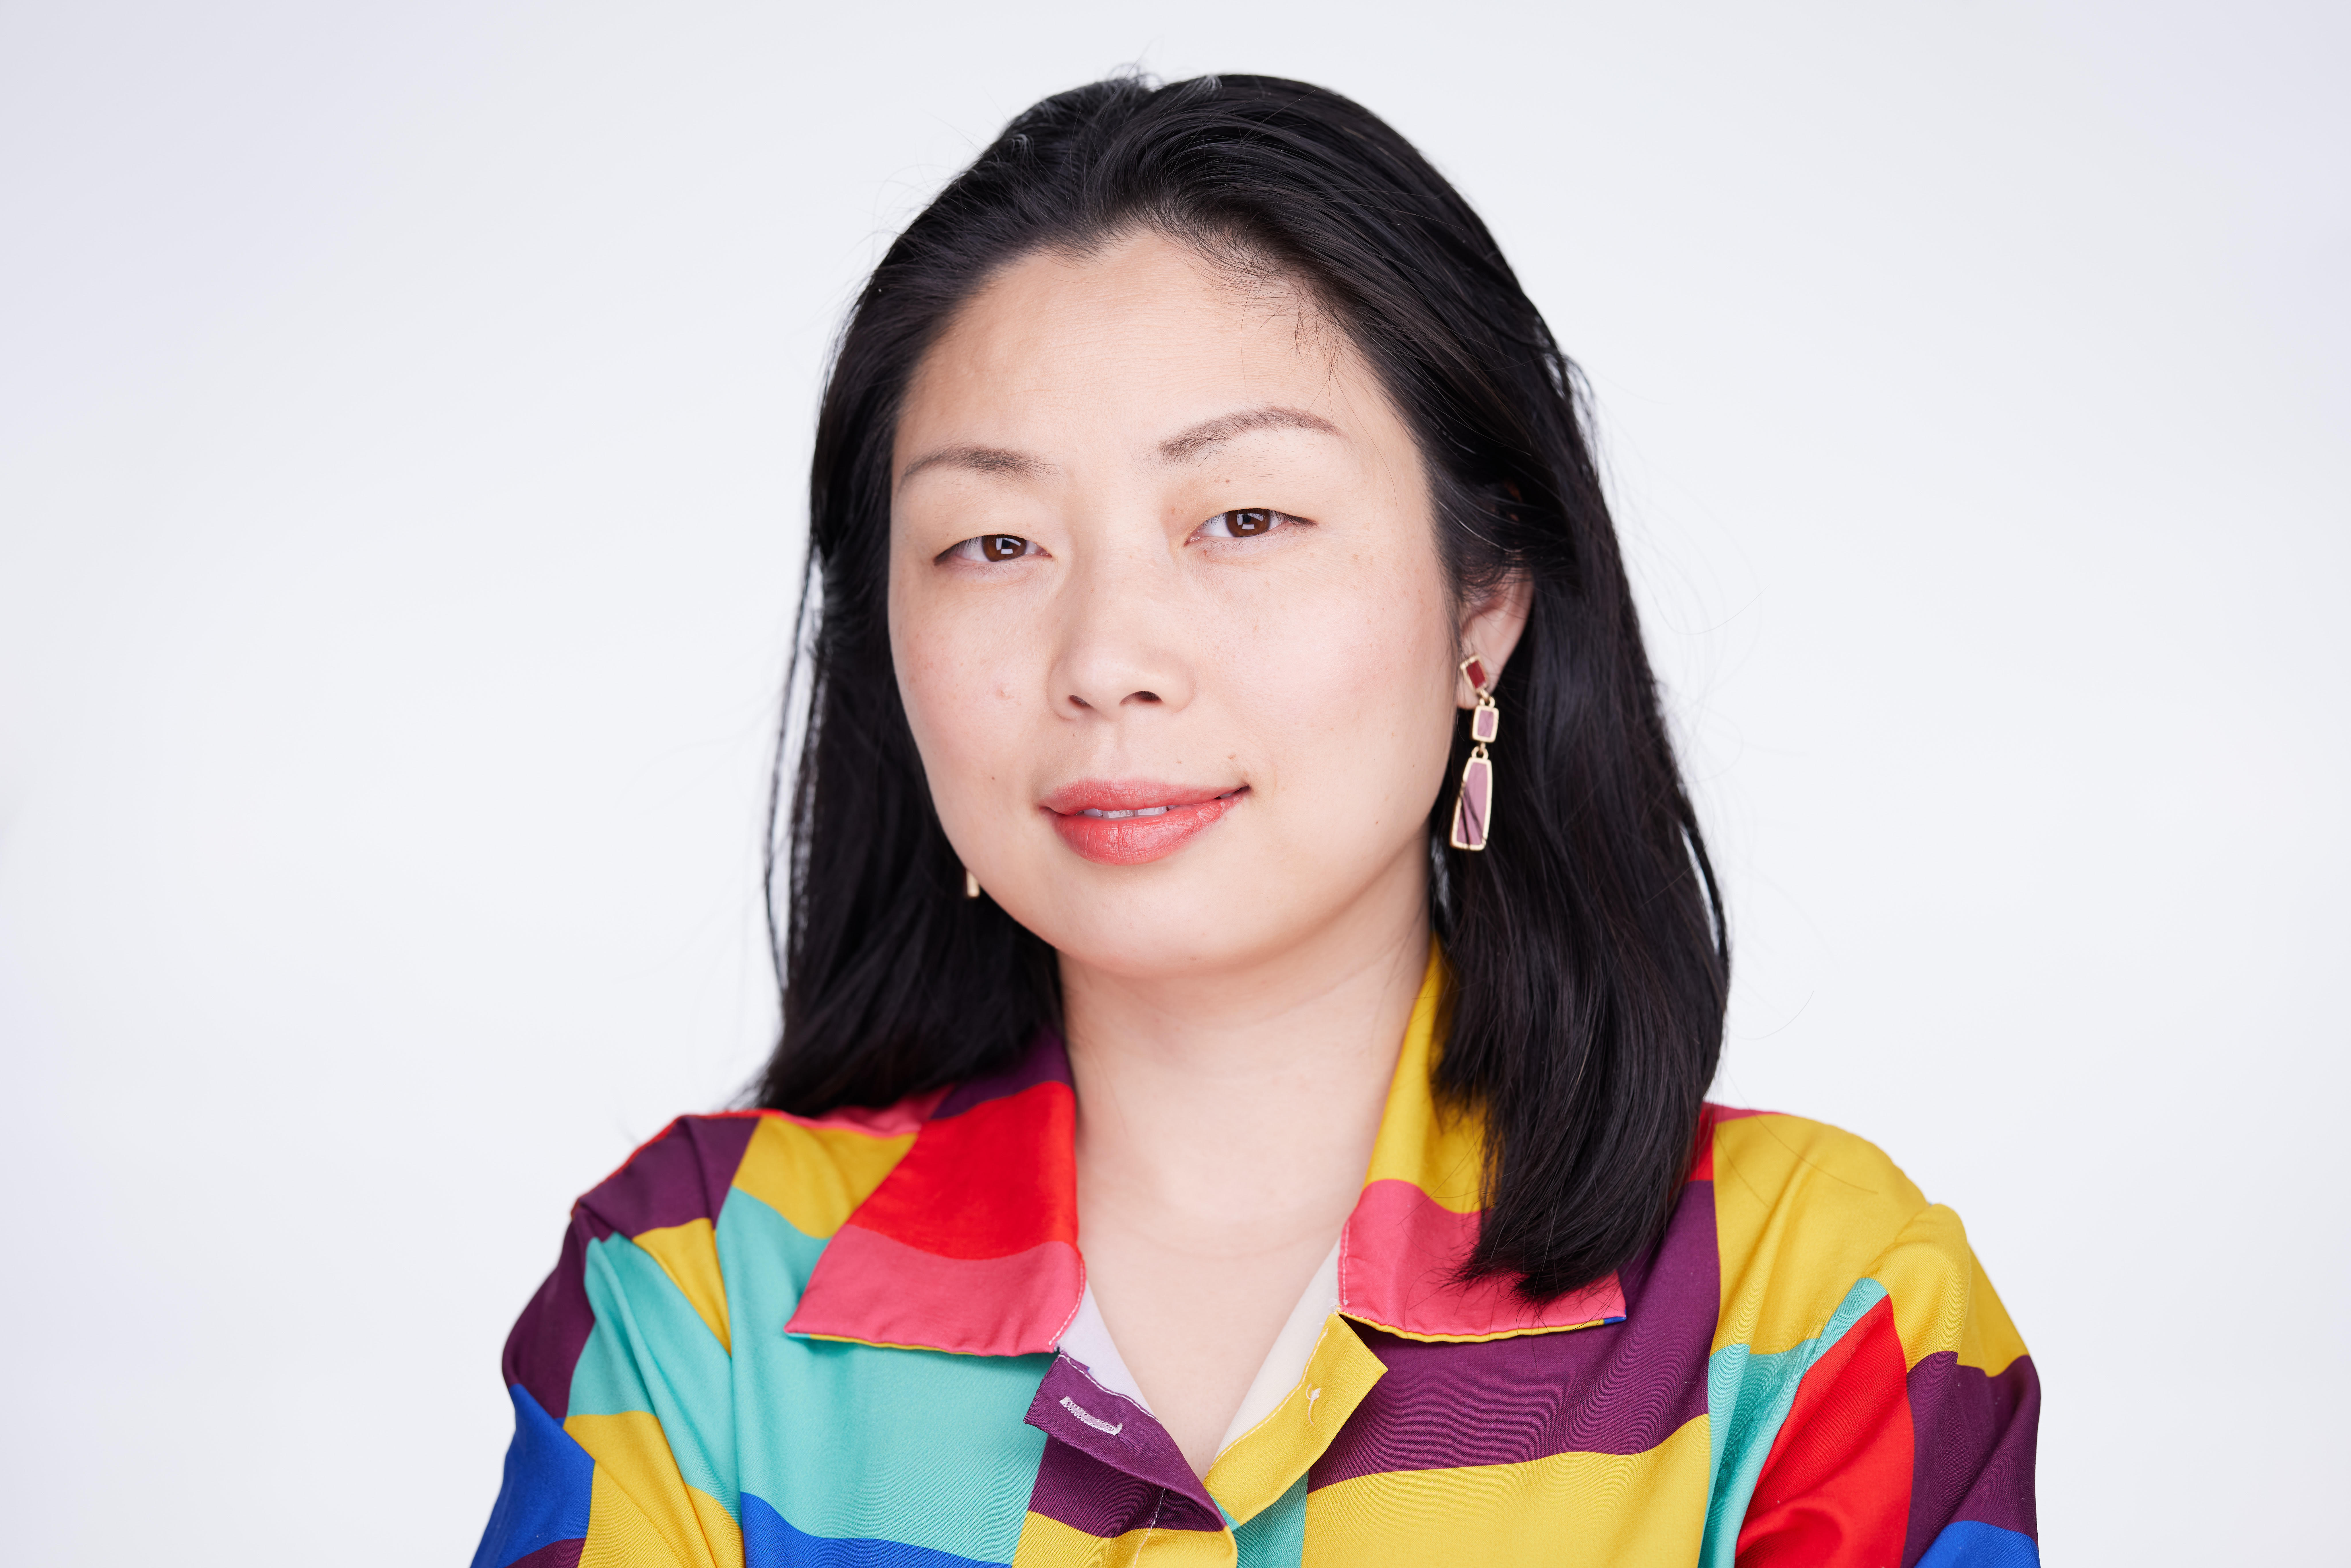 Photograph of Nanfu Wang, an Asian woman with black hair, wearing a colorful shirt and earrings, smiling.